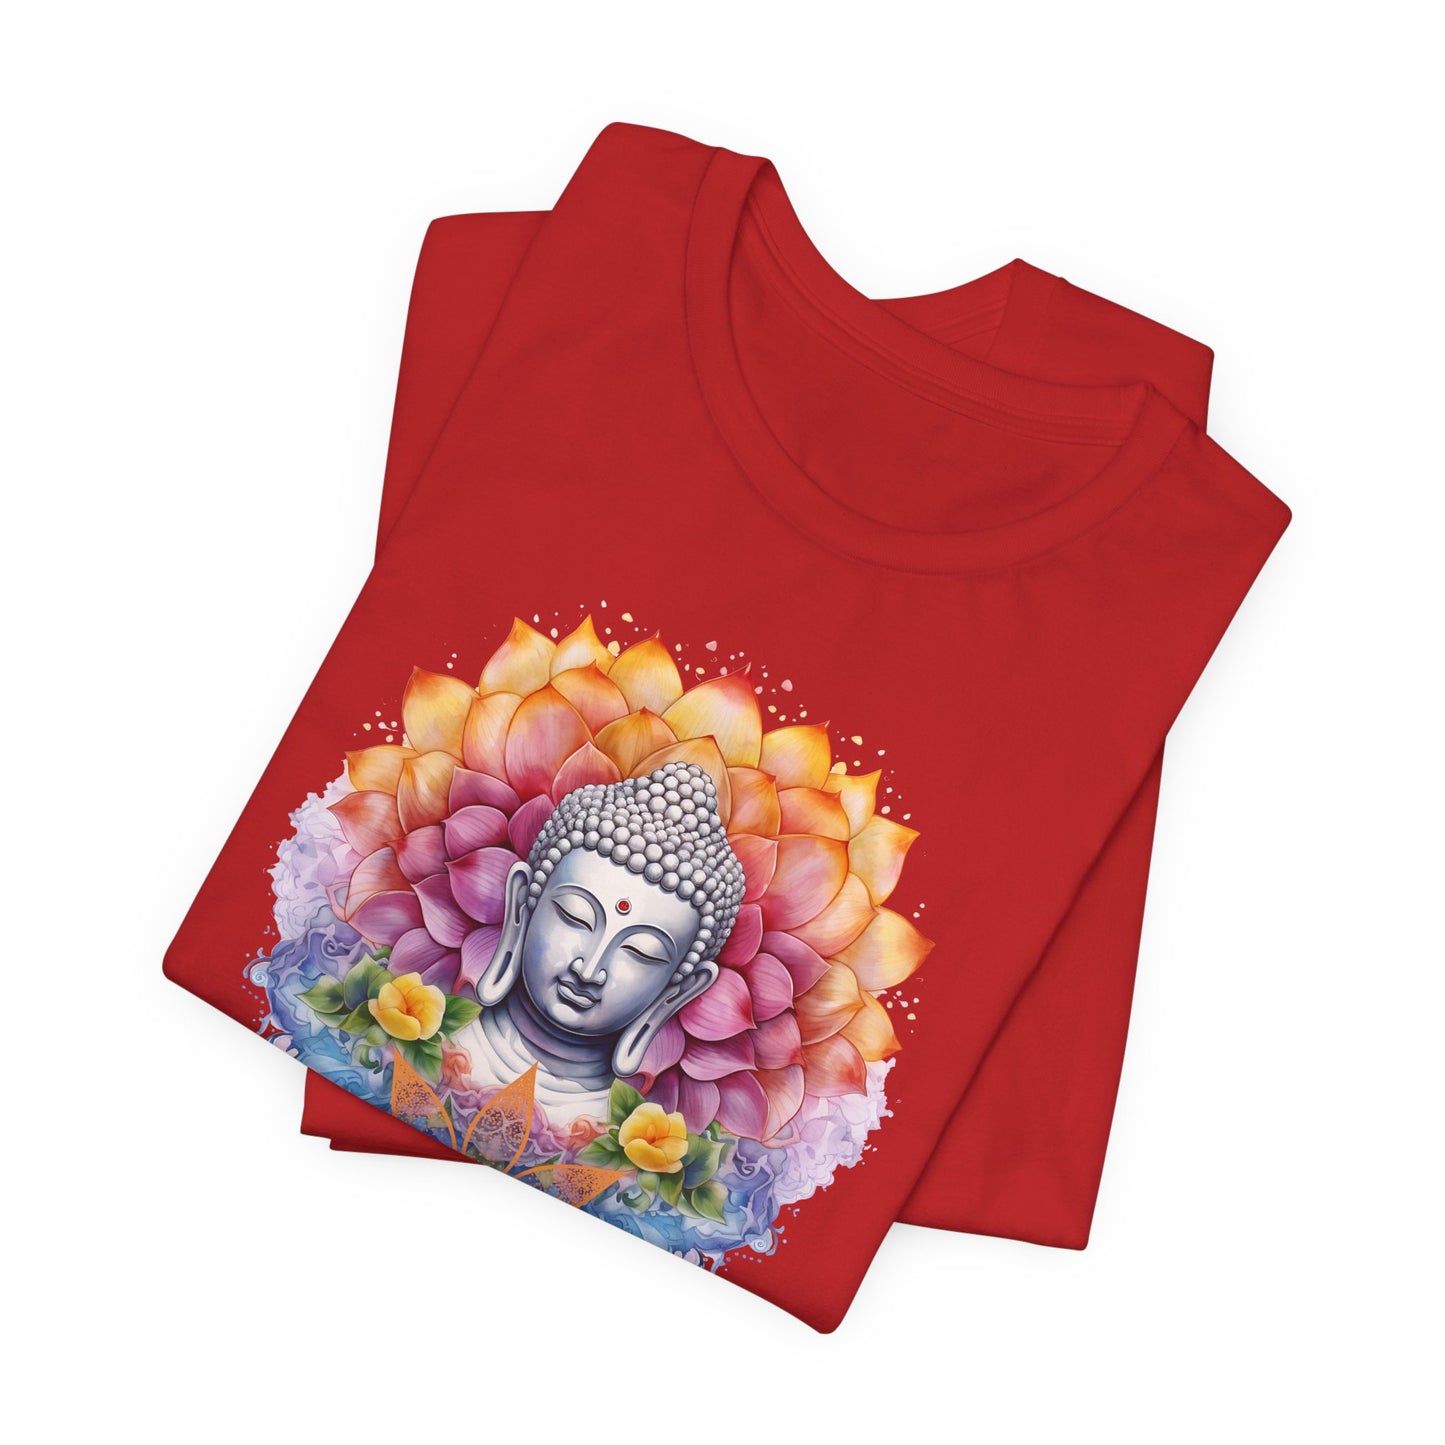 Namaste Yoga T-Shirt, Cute Yoga workout Shirt, Yoga lovers T-shirt, Yoga Instructor Gift, Gym shirt, Gift For Yoga lover, Gift For Yogi.